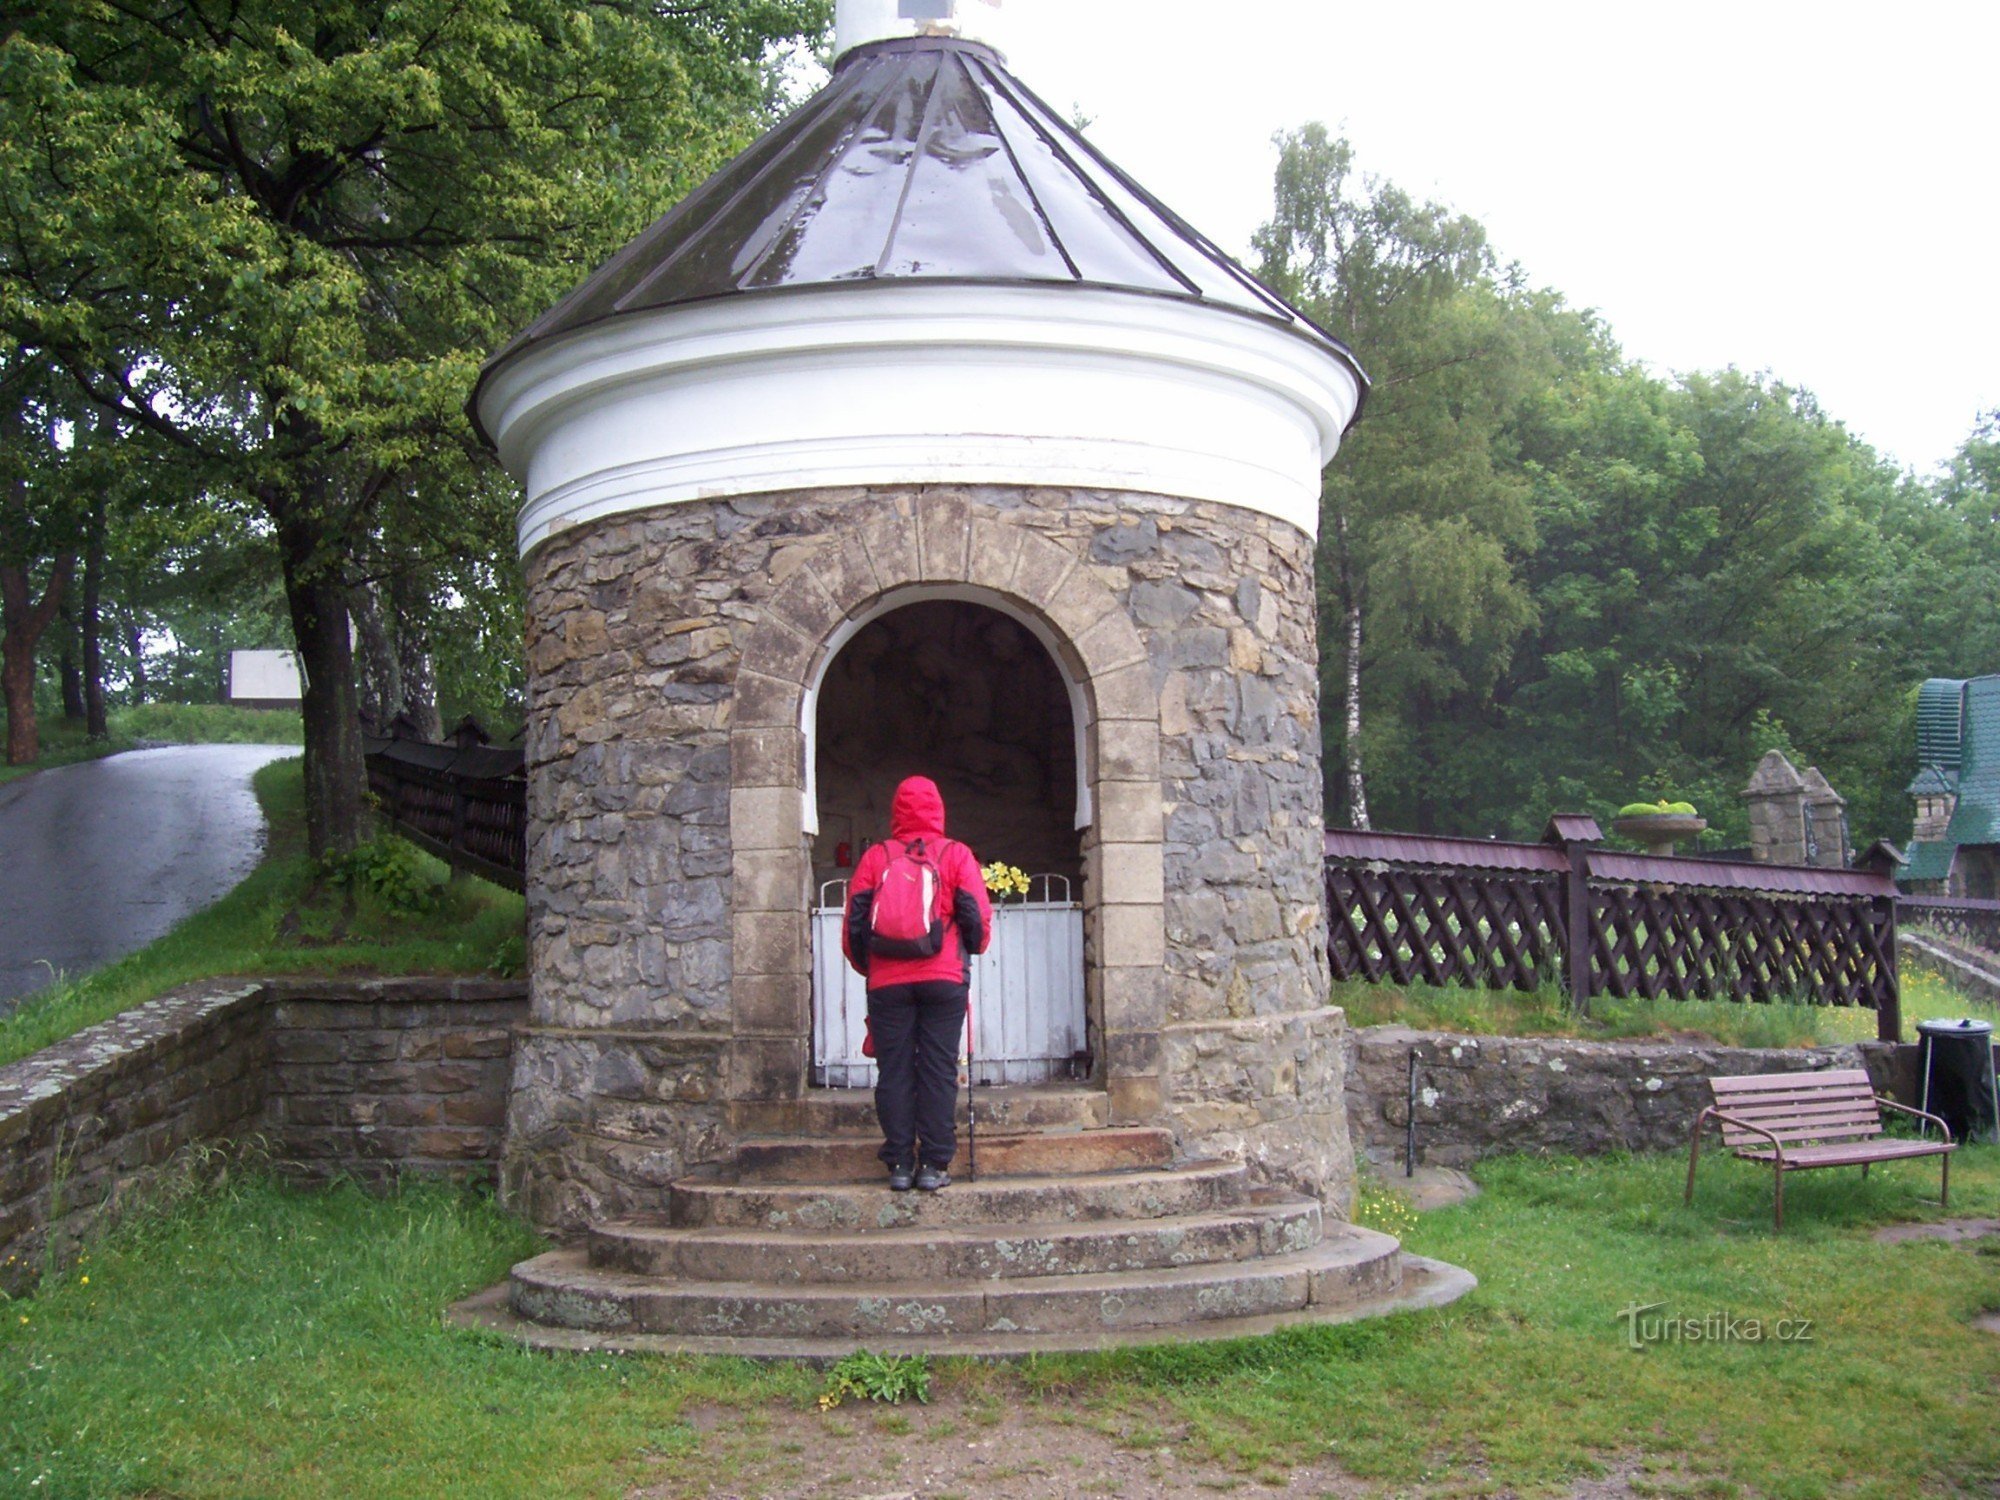 Hostýn-capela la cimitirul de munte